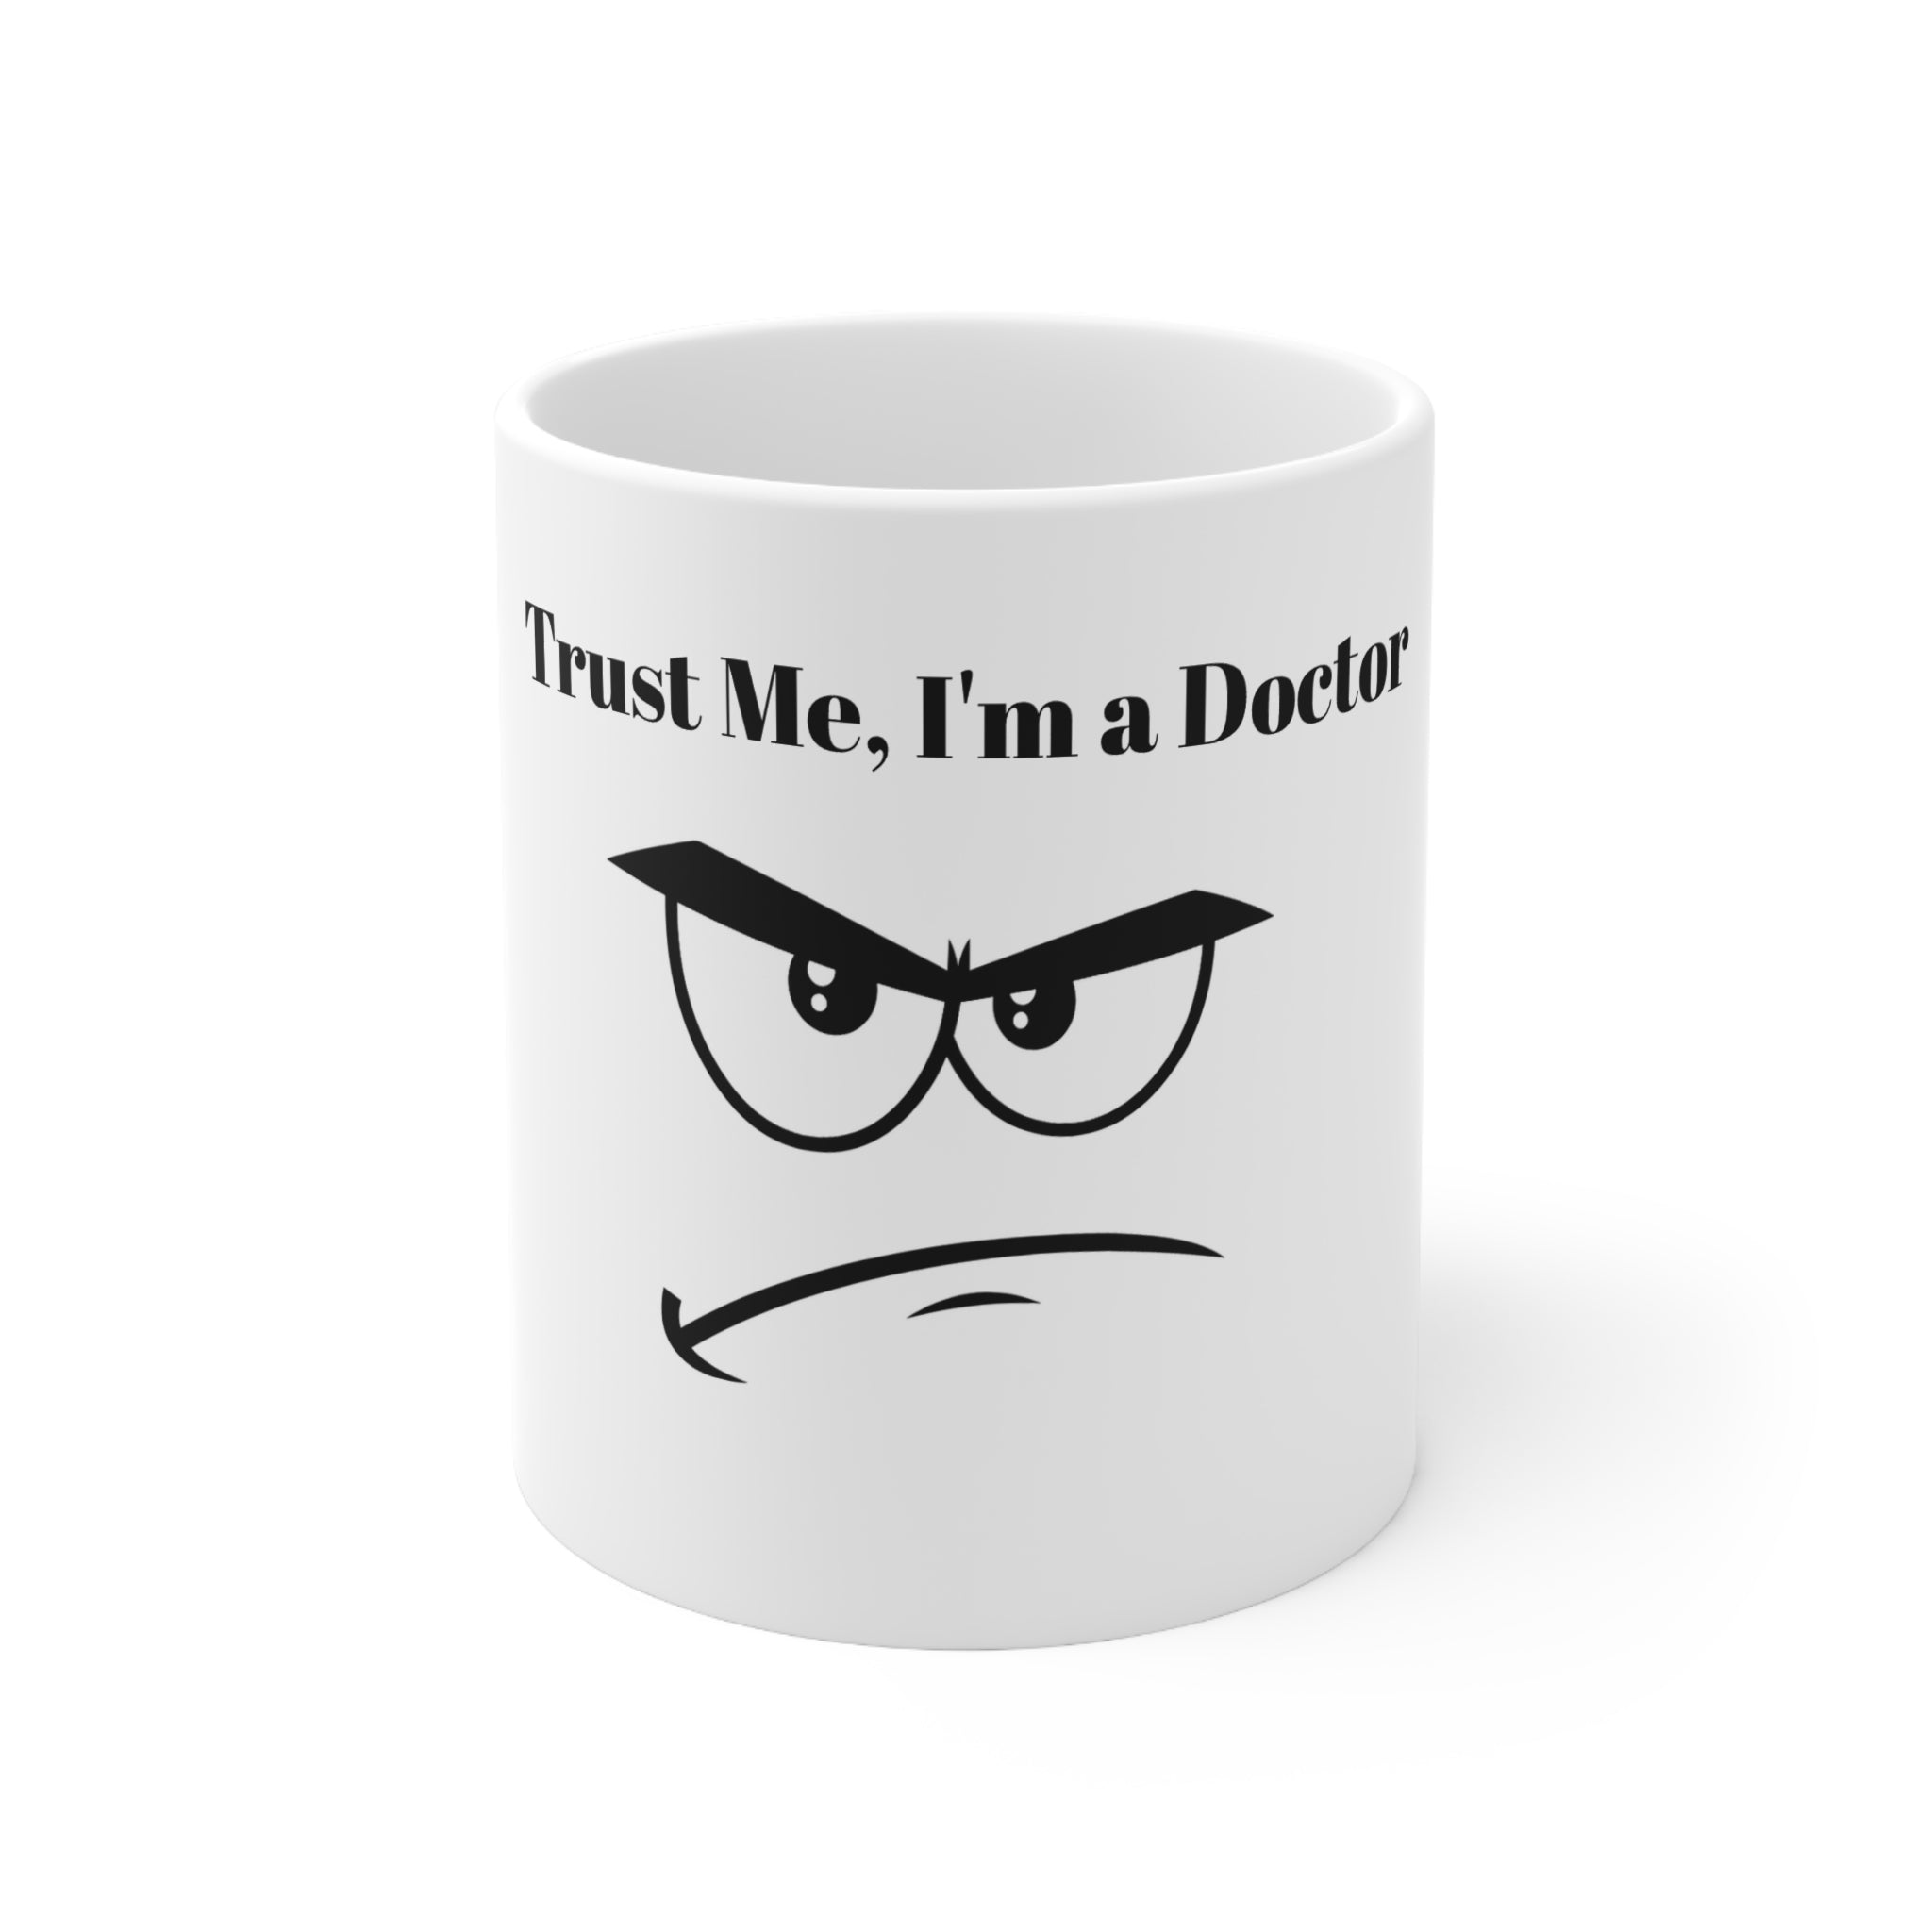 Trust Me I'm a Doctor", "Ceramic Mug", "11oz", "Unique Office", and "Leader Gift